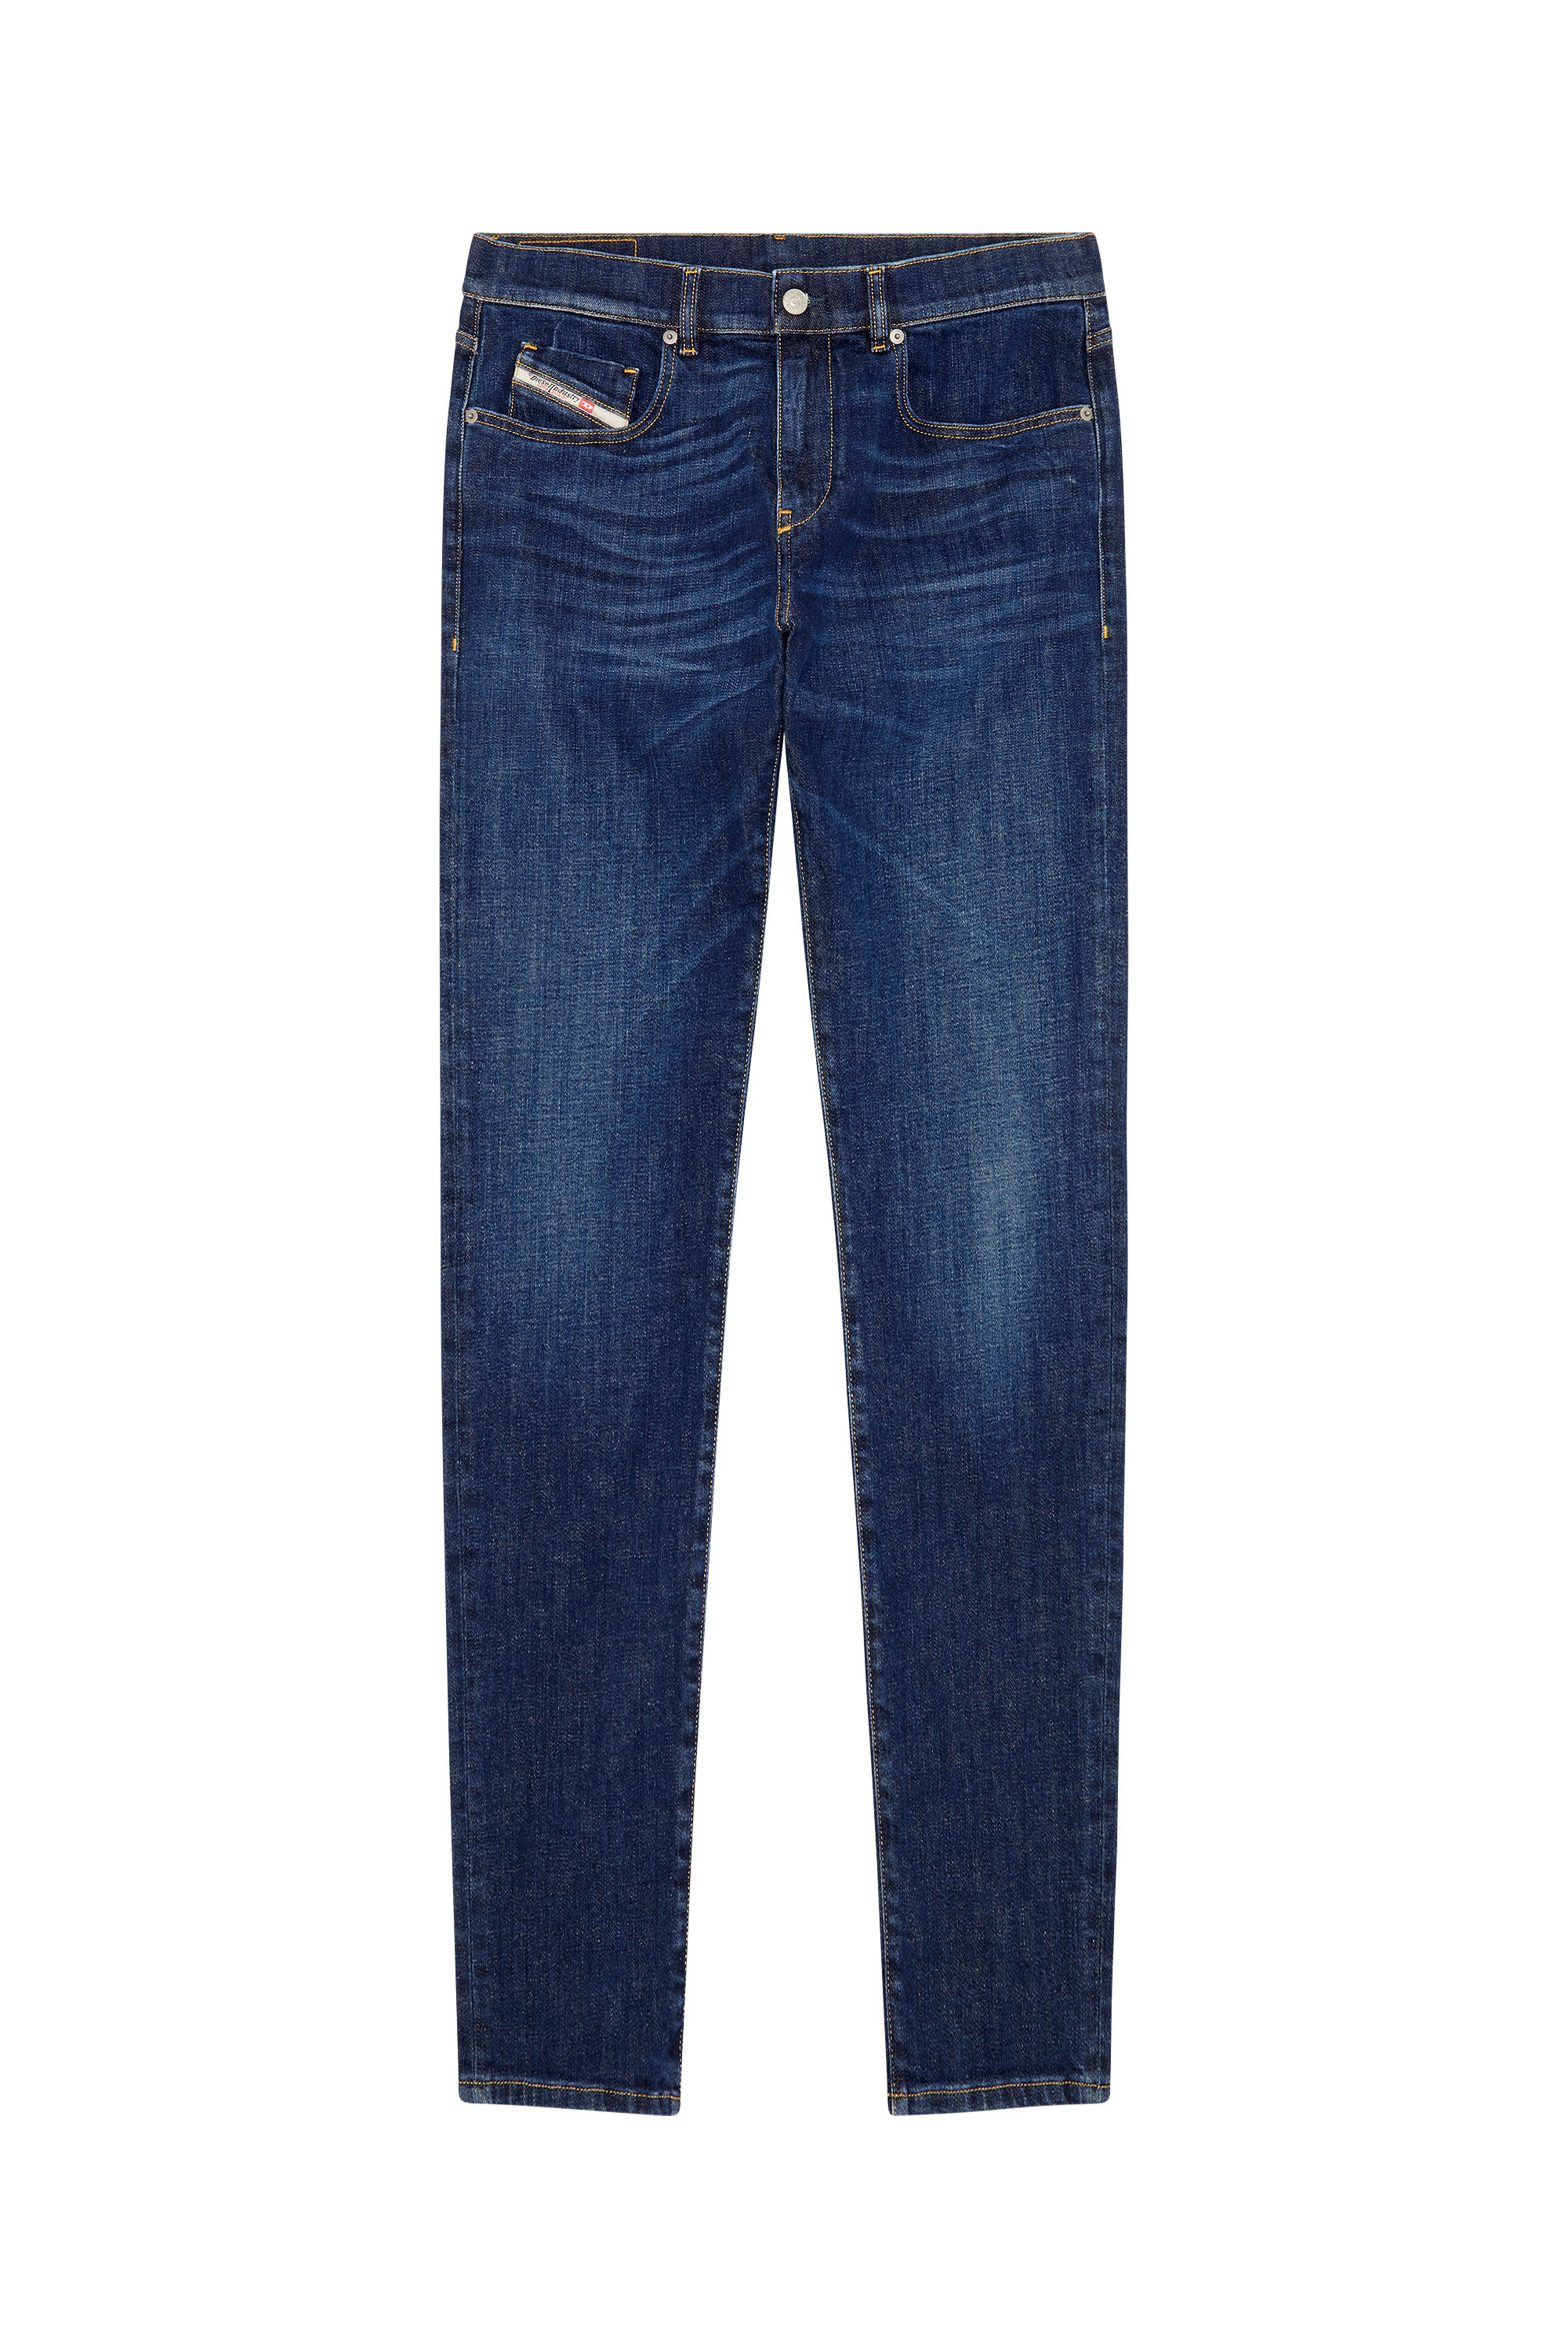 2019 D-STRUKT 09B90 Slim Jeans, Blu Scuro - Jeans